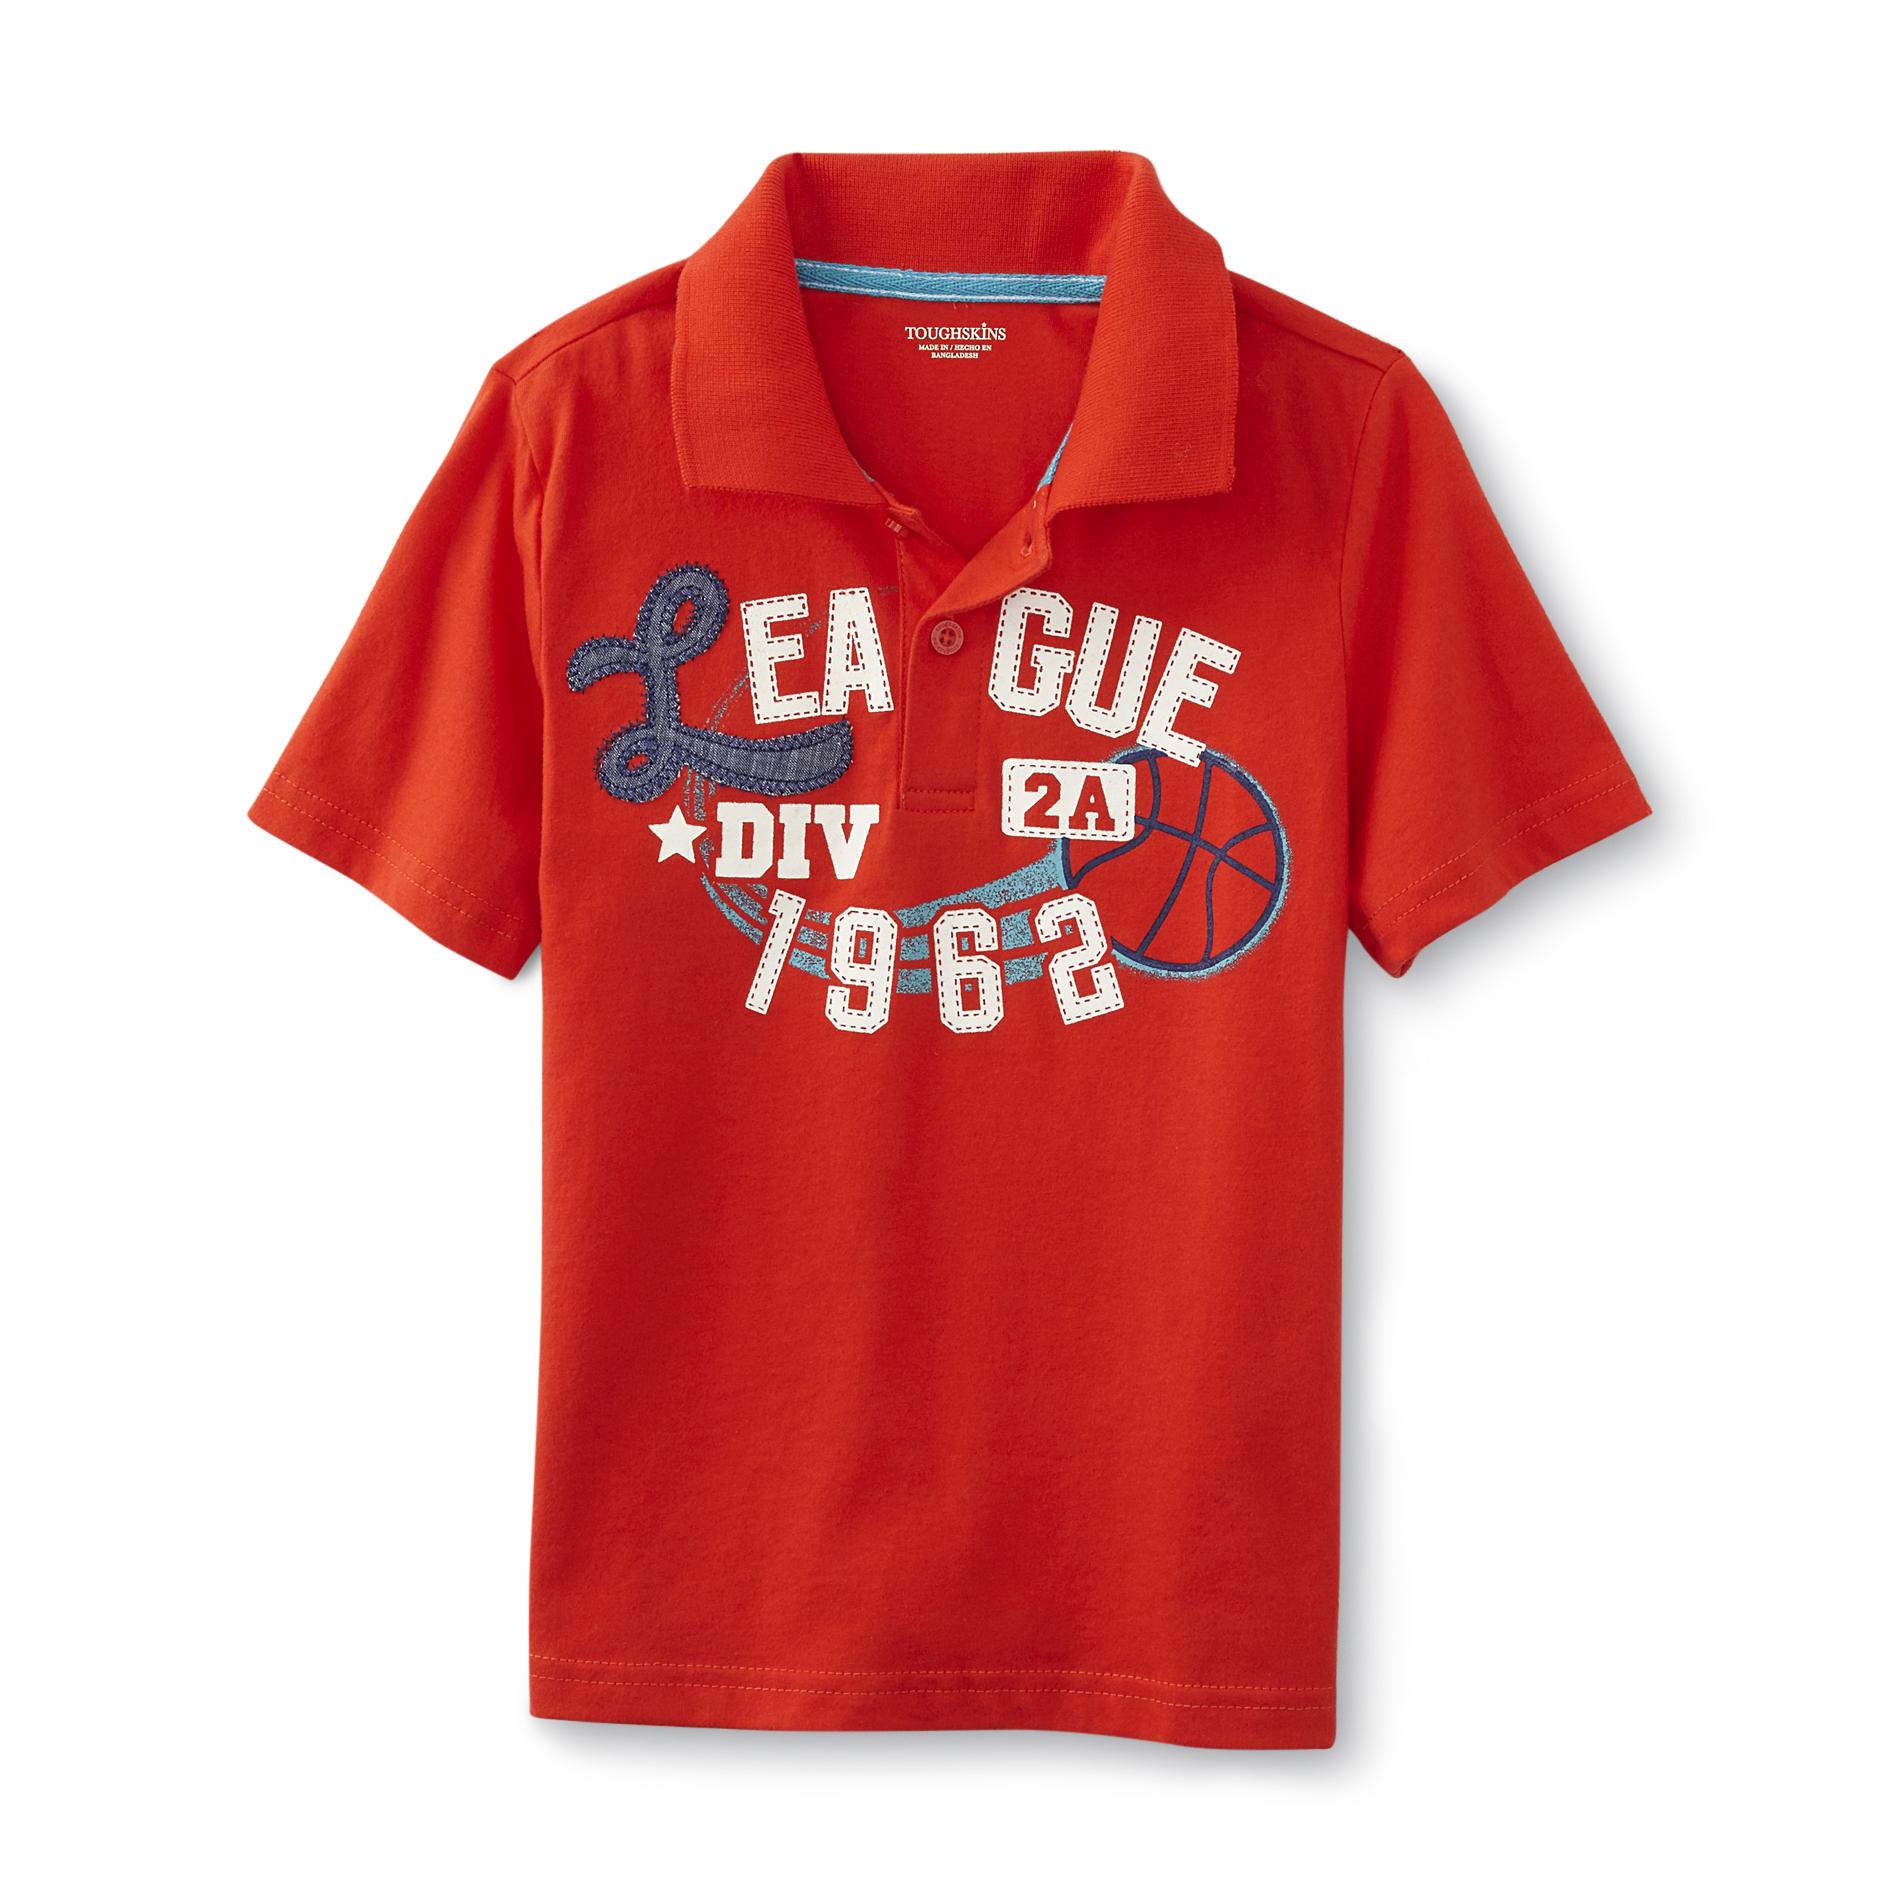 Toughskins Infant & Toddler Boy's Polo Shirt - Basketball